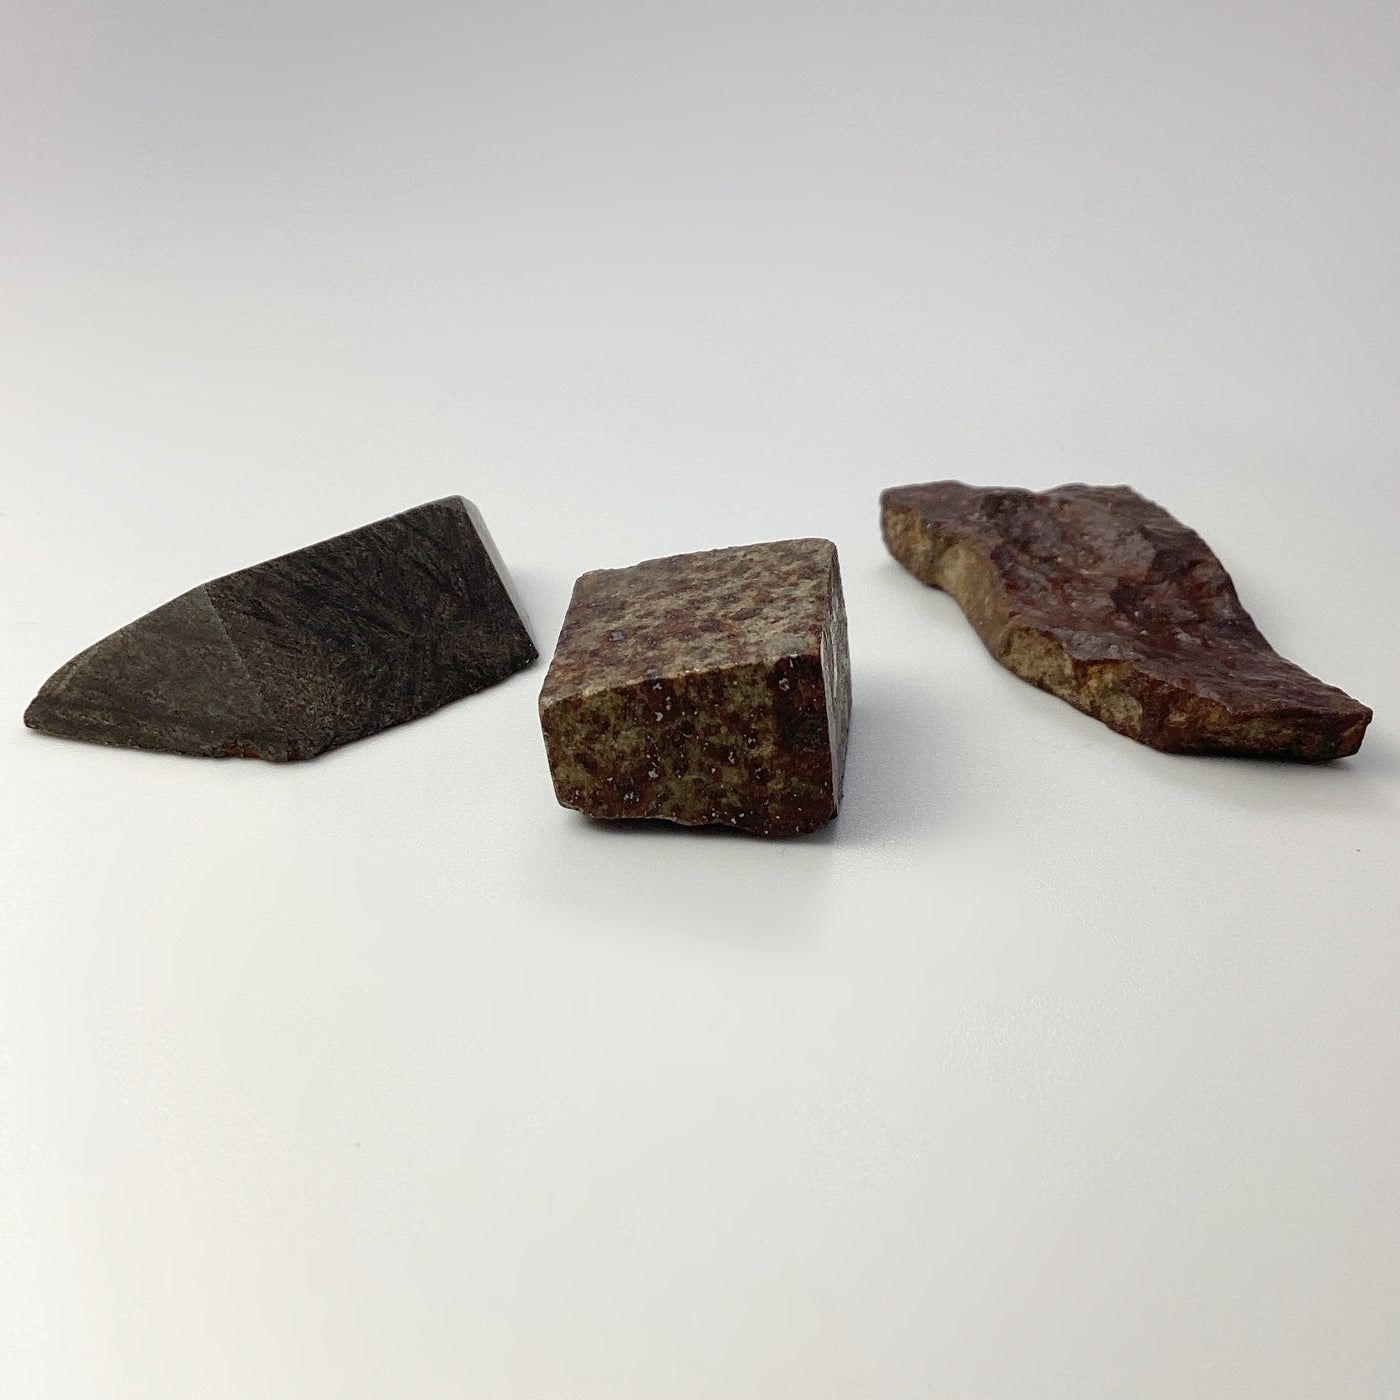 NWA Chondrite Meteorite Specimen at $55 Each